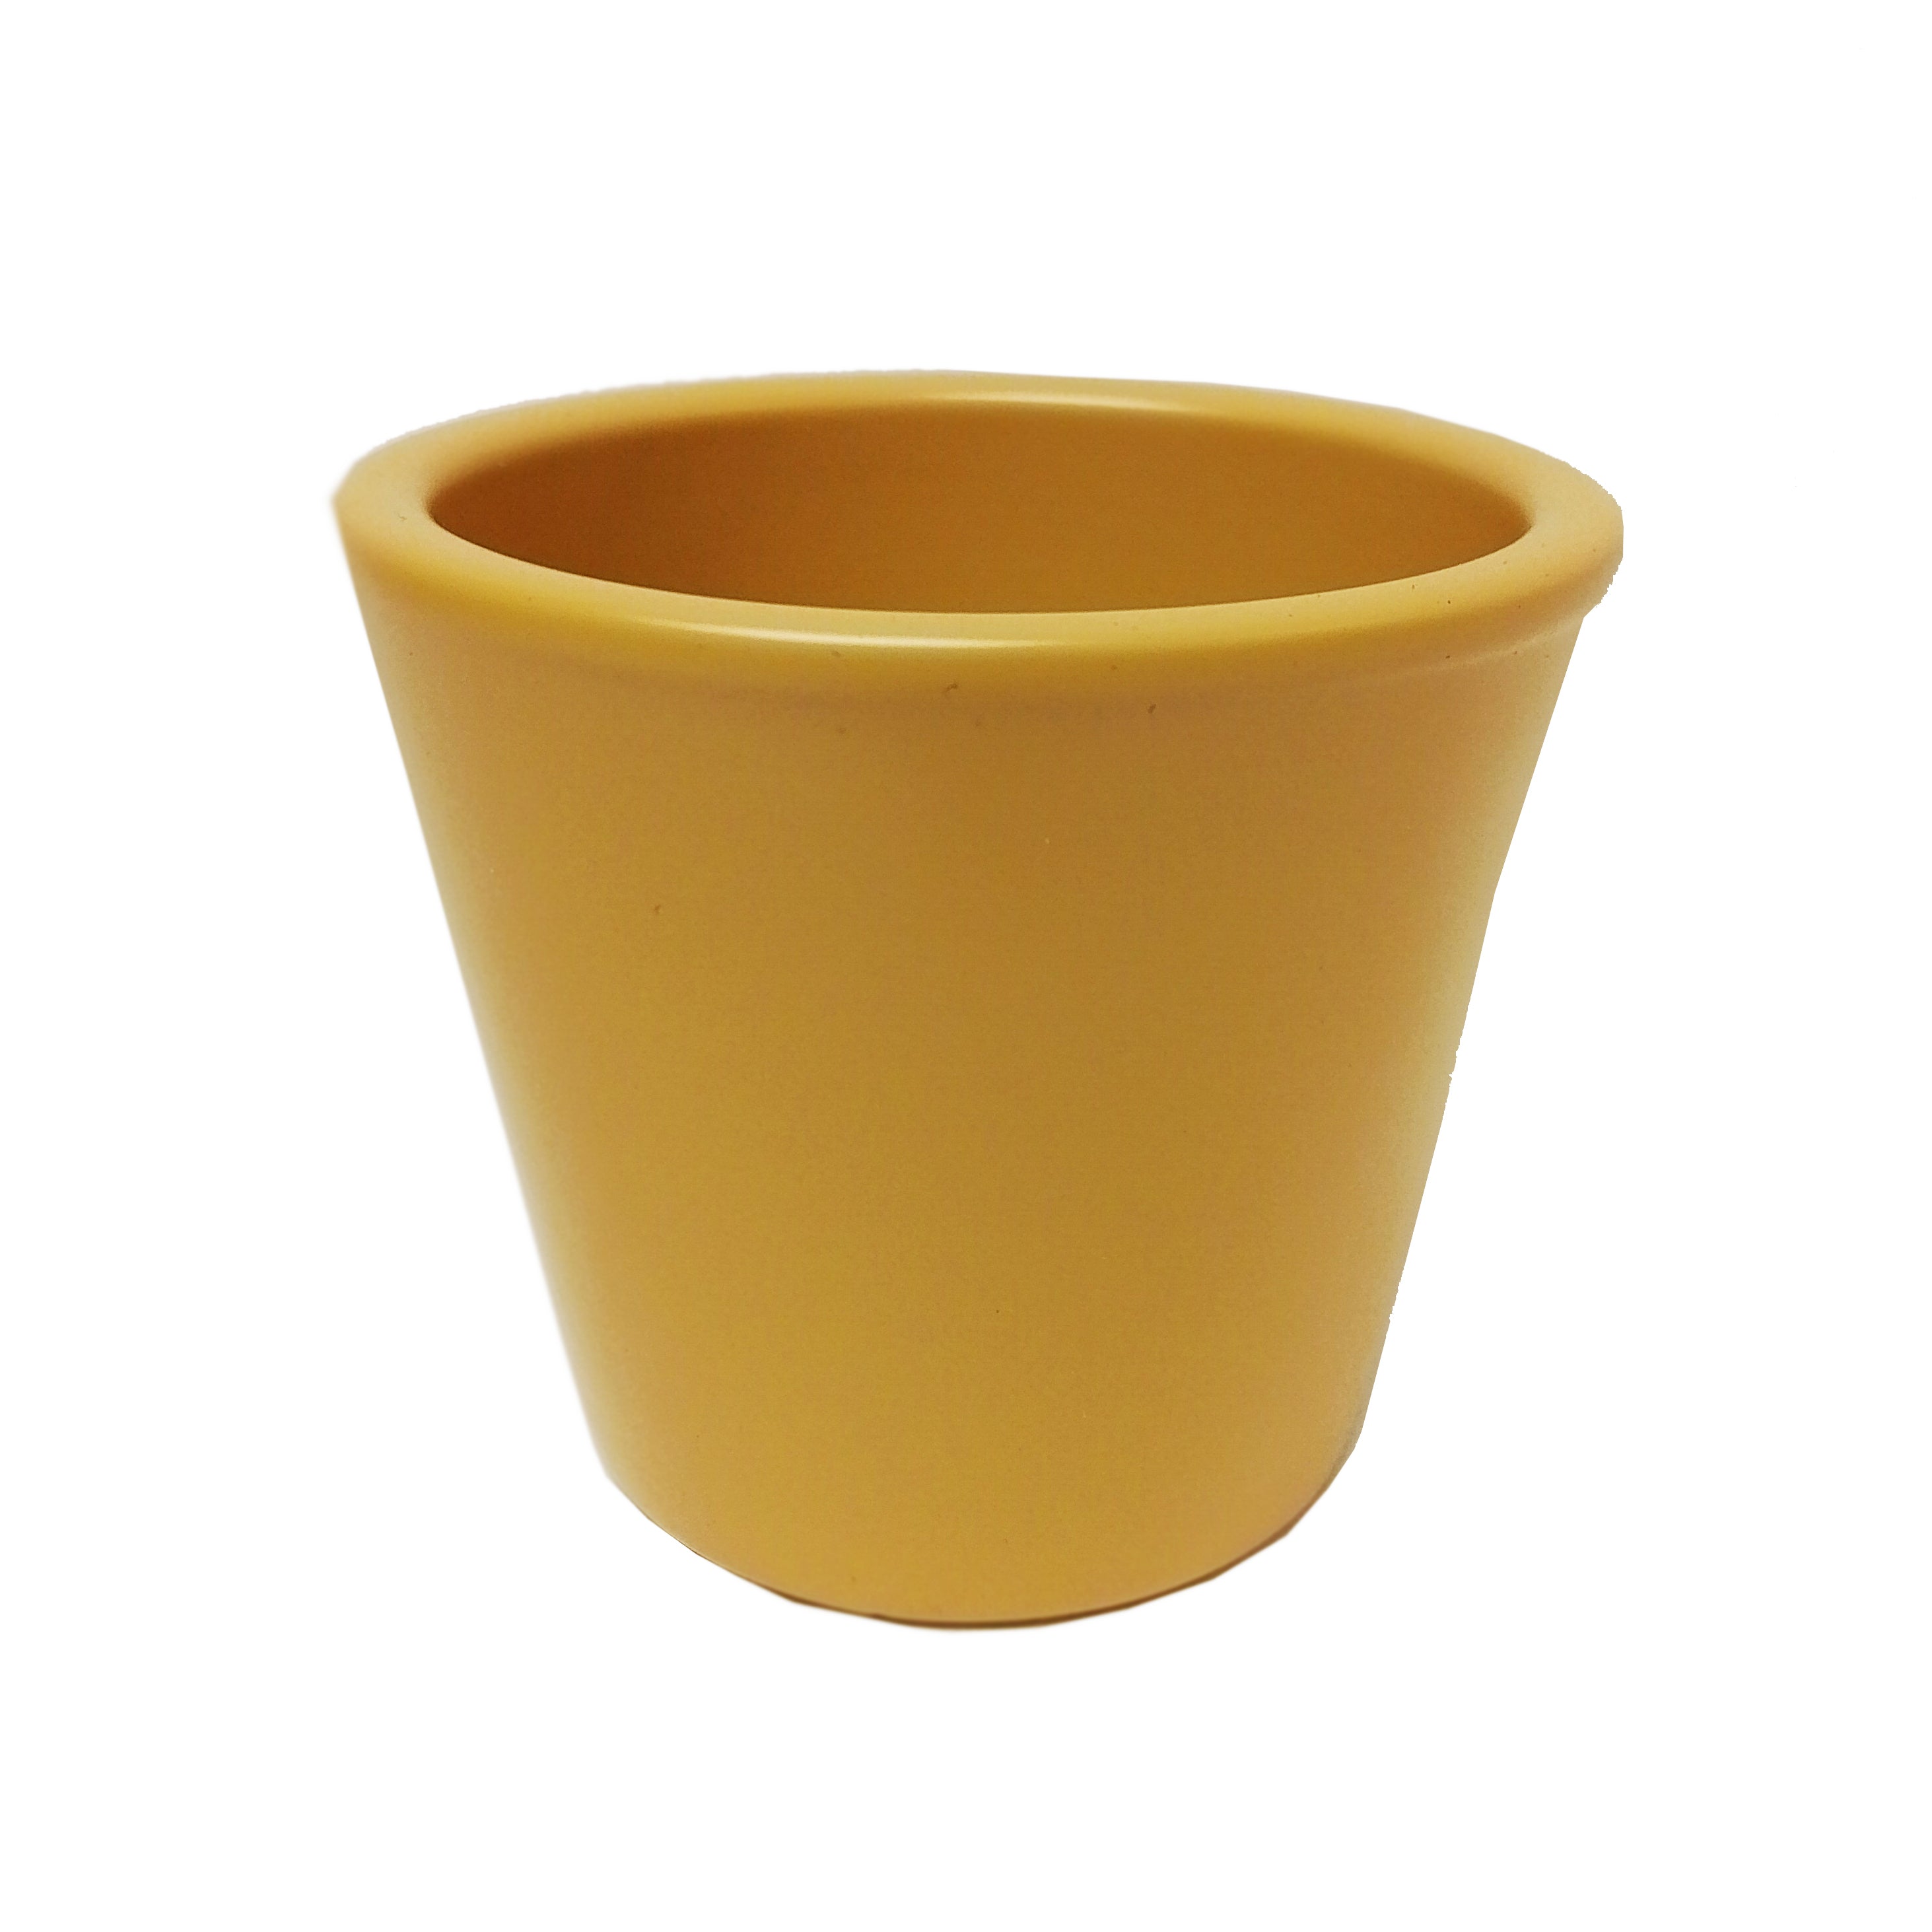 Vinci Mustard Plant Pot - Ceramic Plant Pot